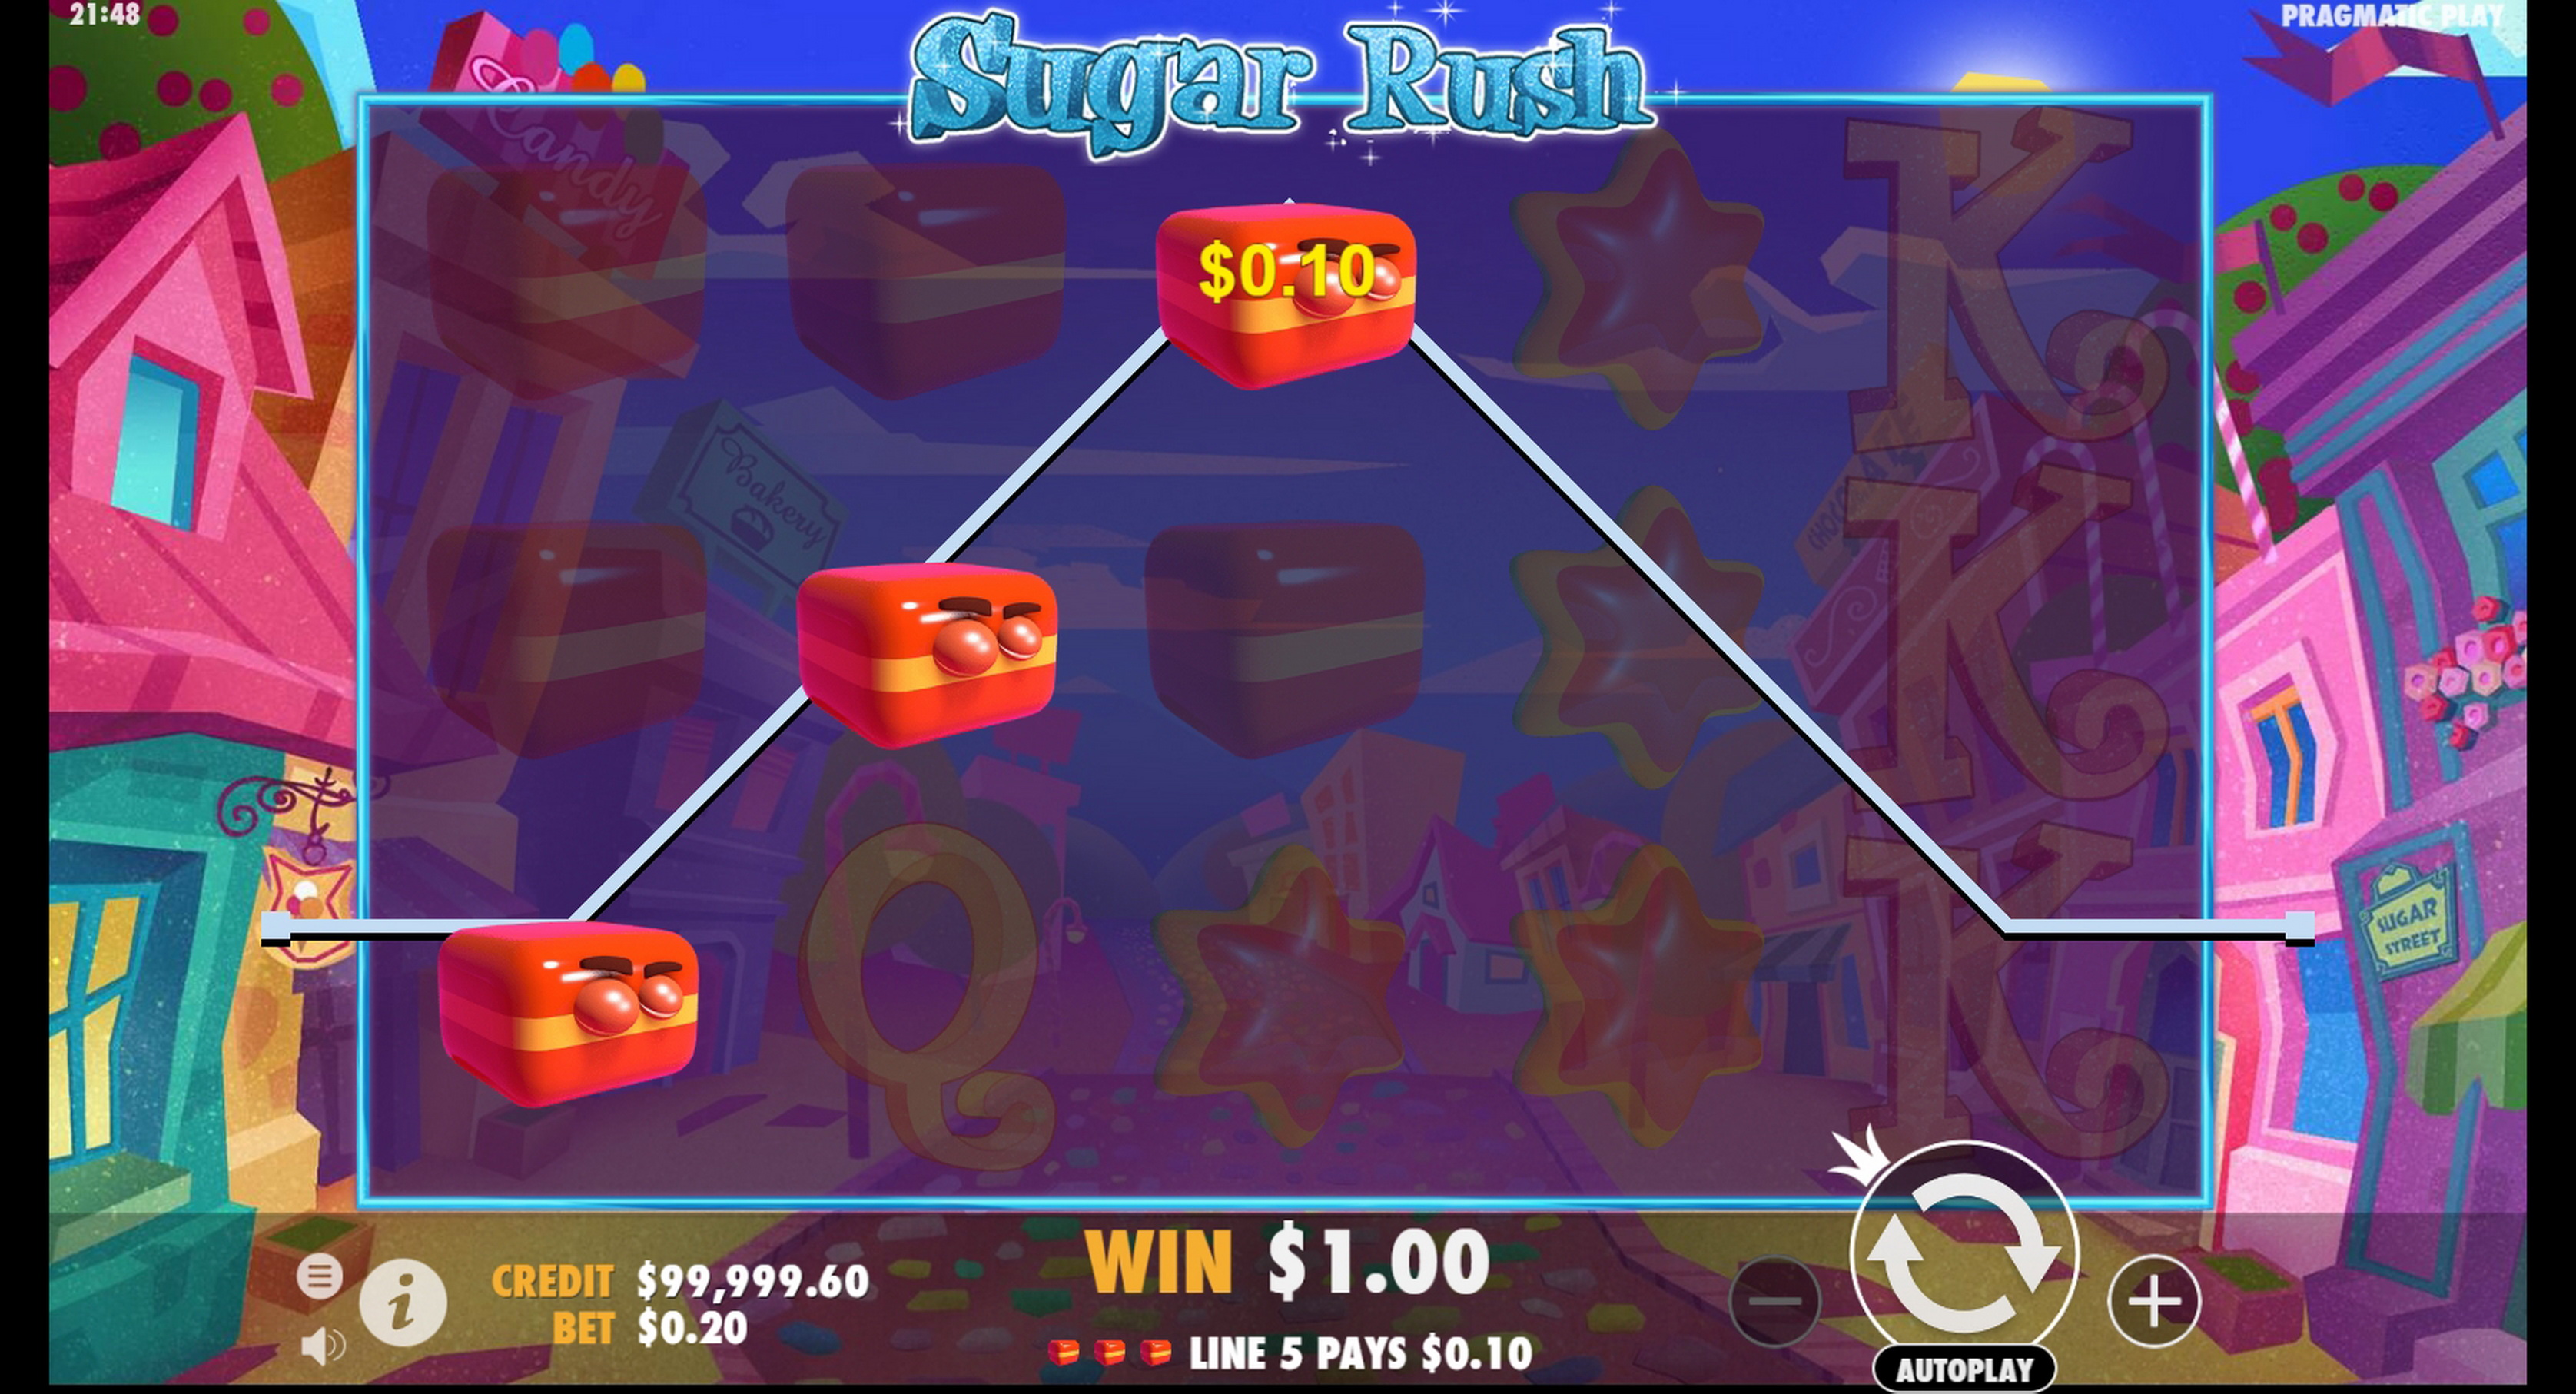 Win Money in Sugar Rush Free Slot Game by Pragmatic Play